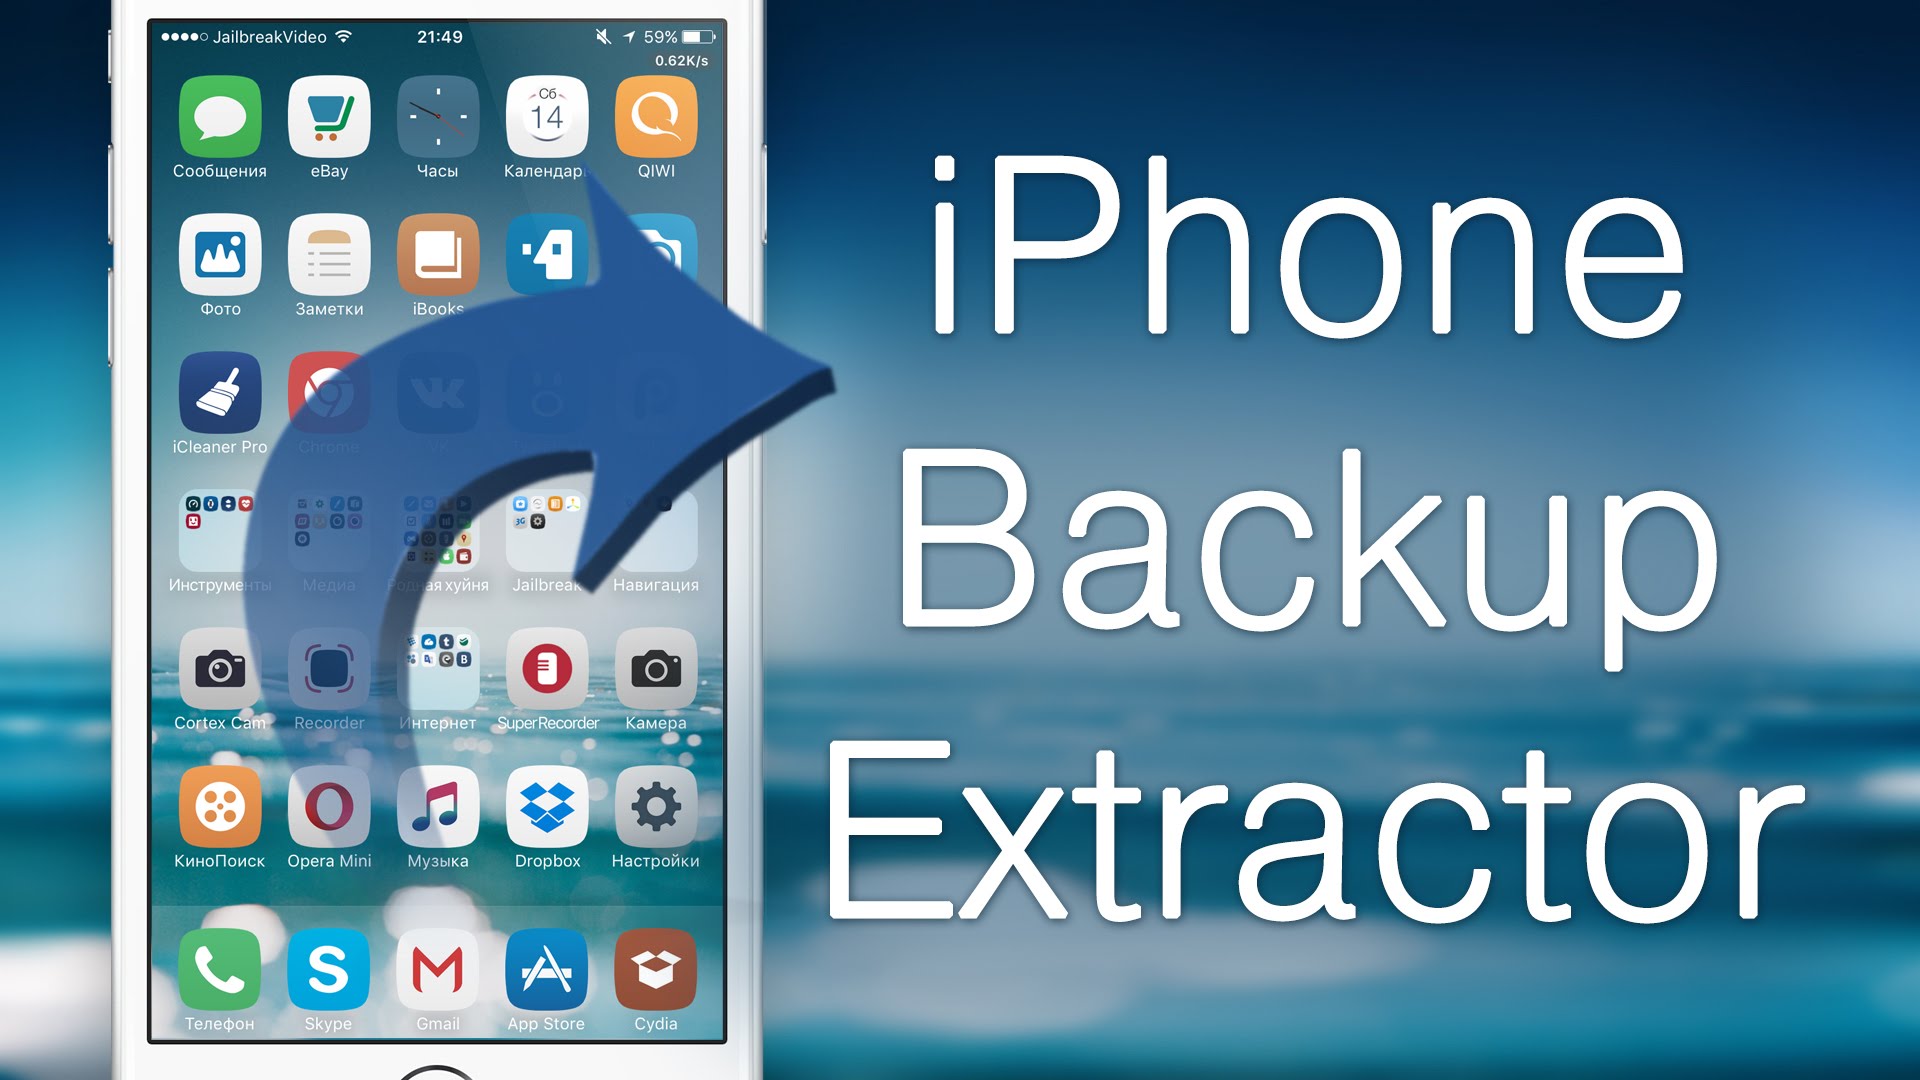 best iphone backup extractor